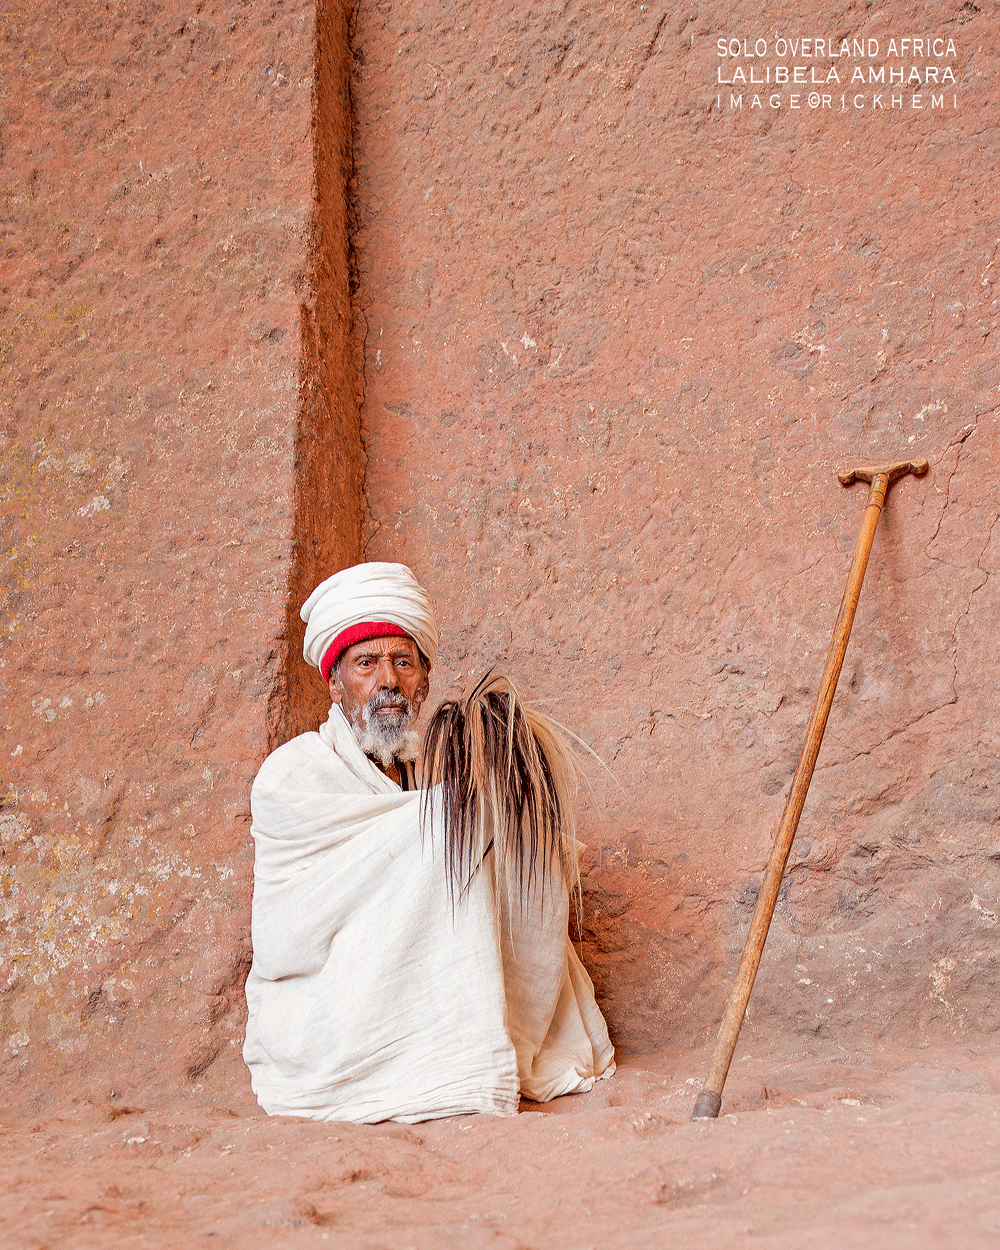 overland travel Africa, pilgrim Lalibela Amhara, image by Rick Hemi